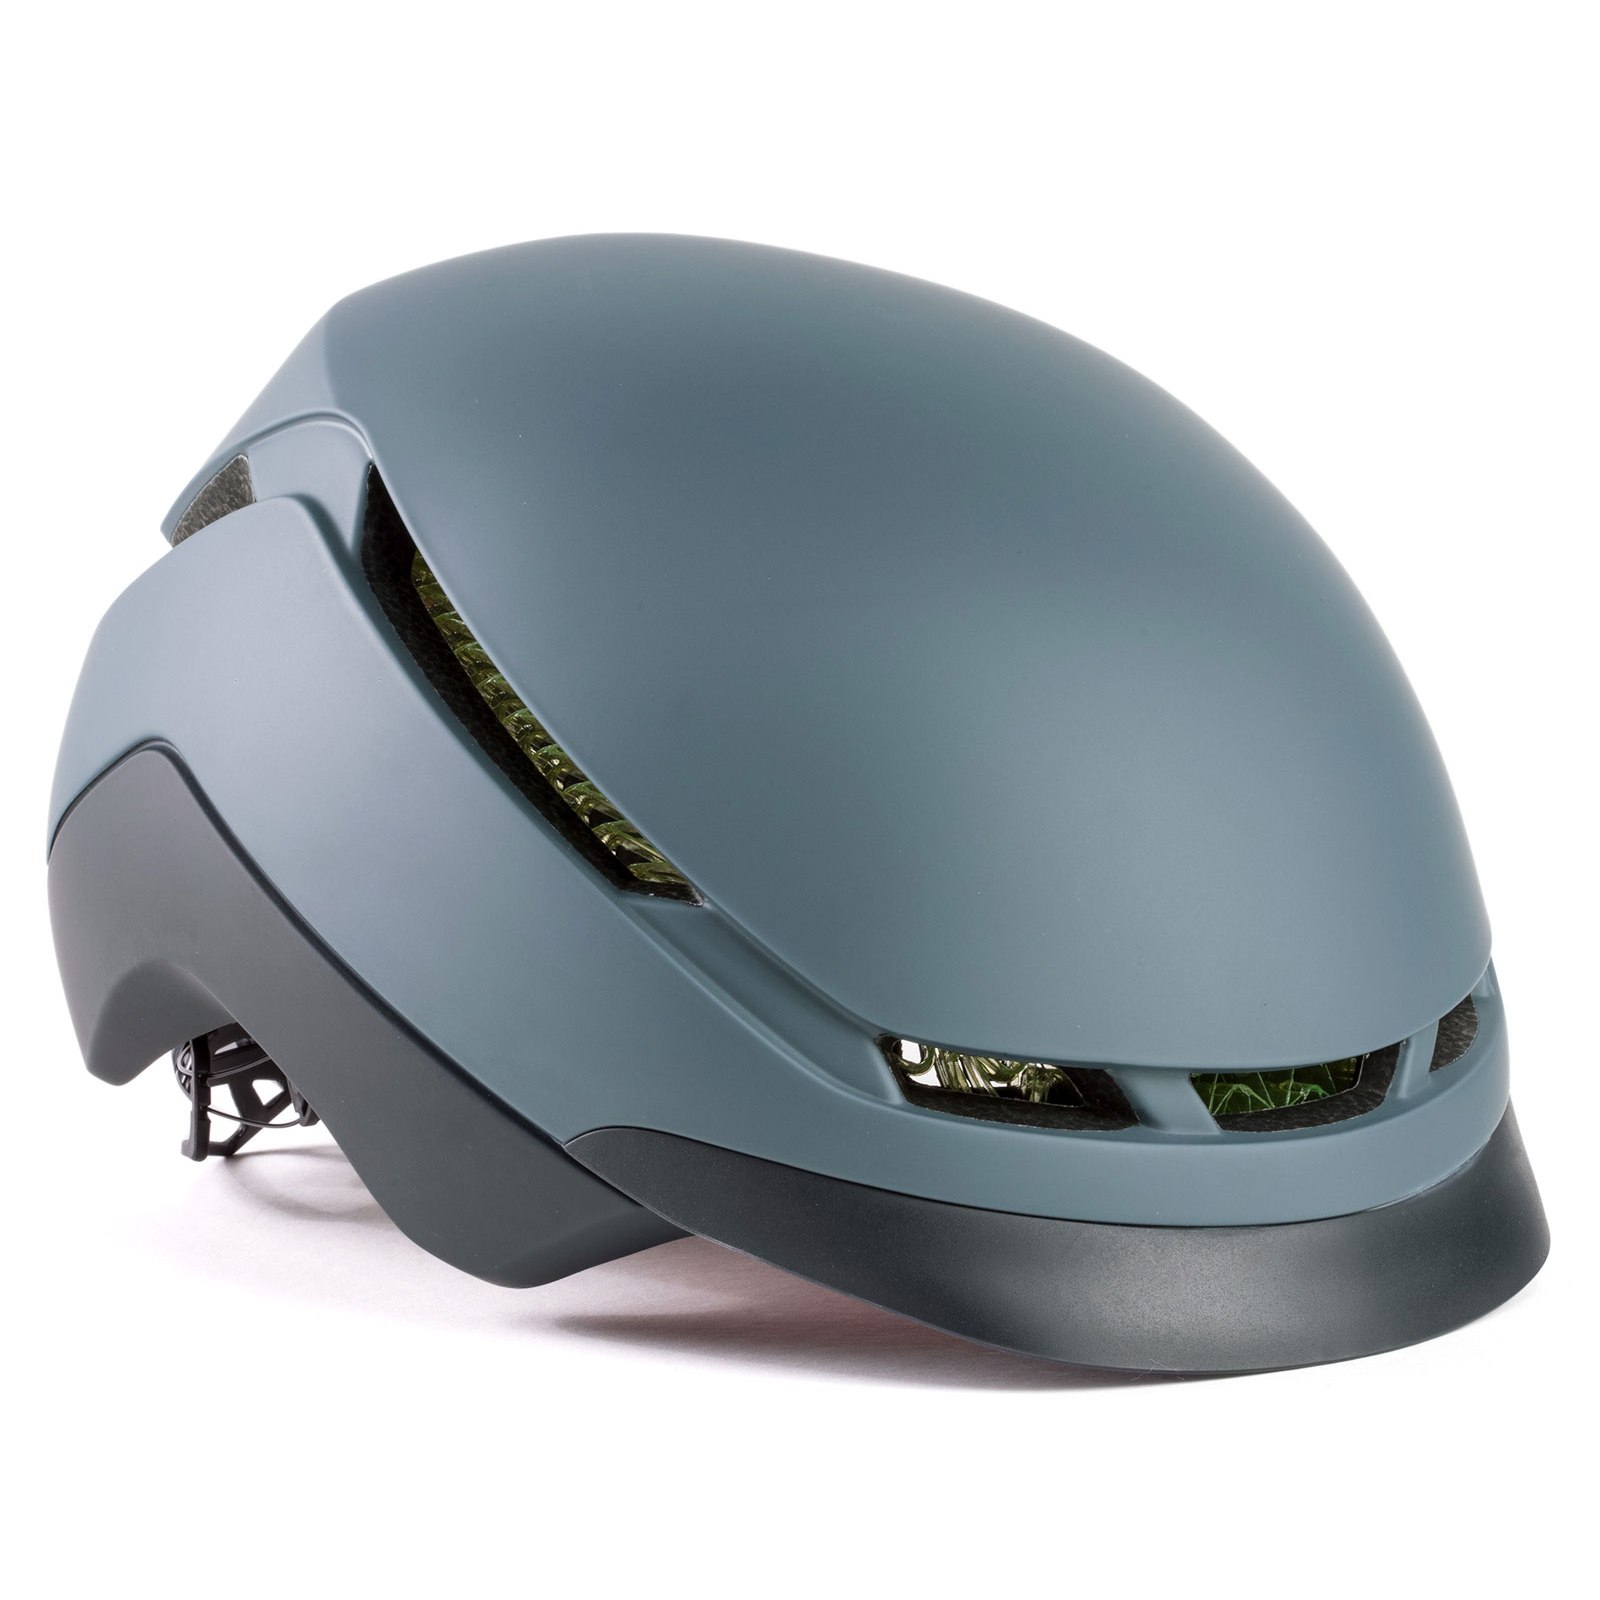 Produktbild von Bontrager Charge WaveCel Commuter E-Bike Helm - battleship blue